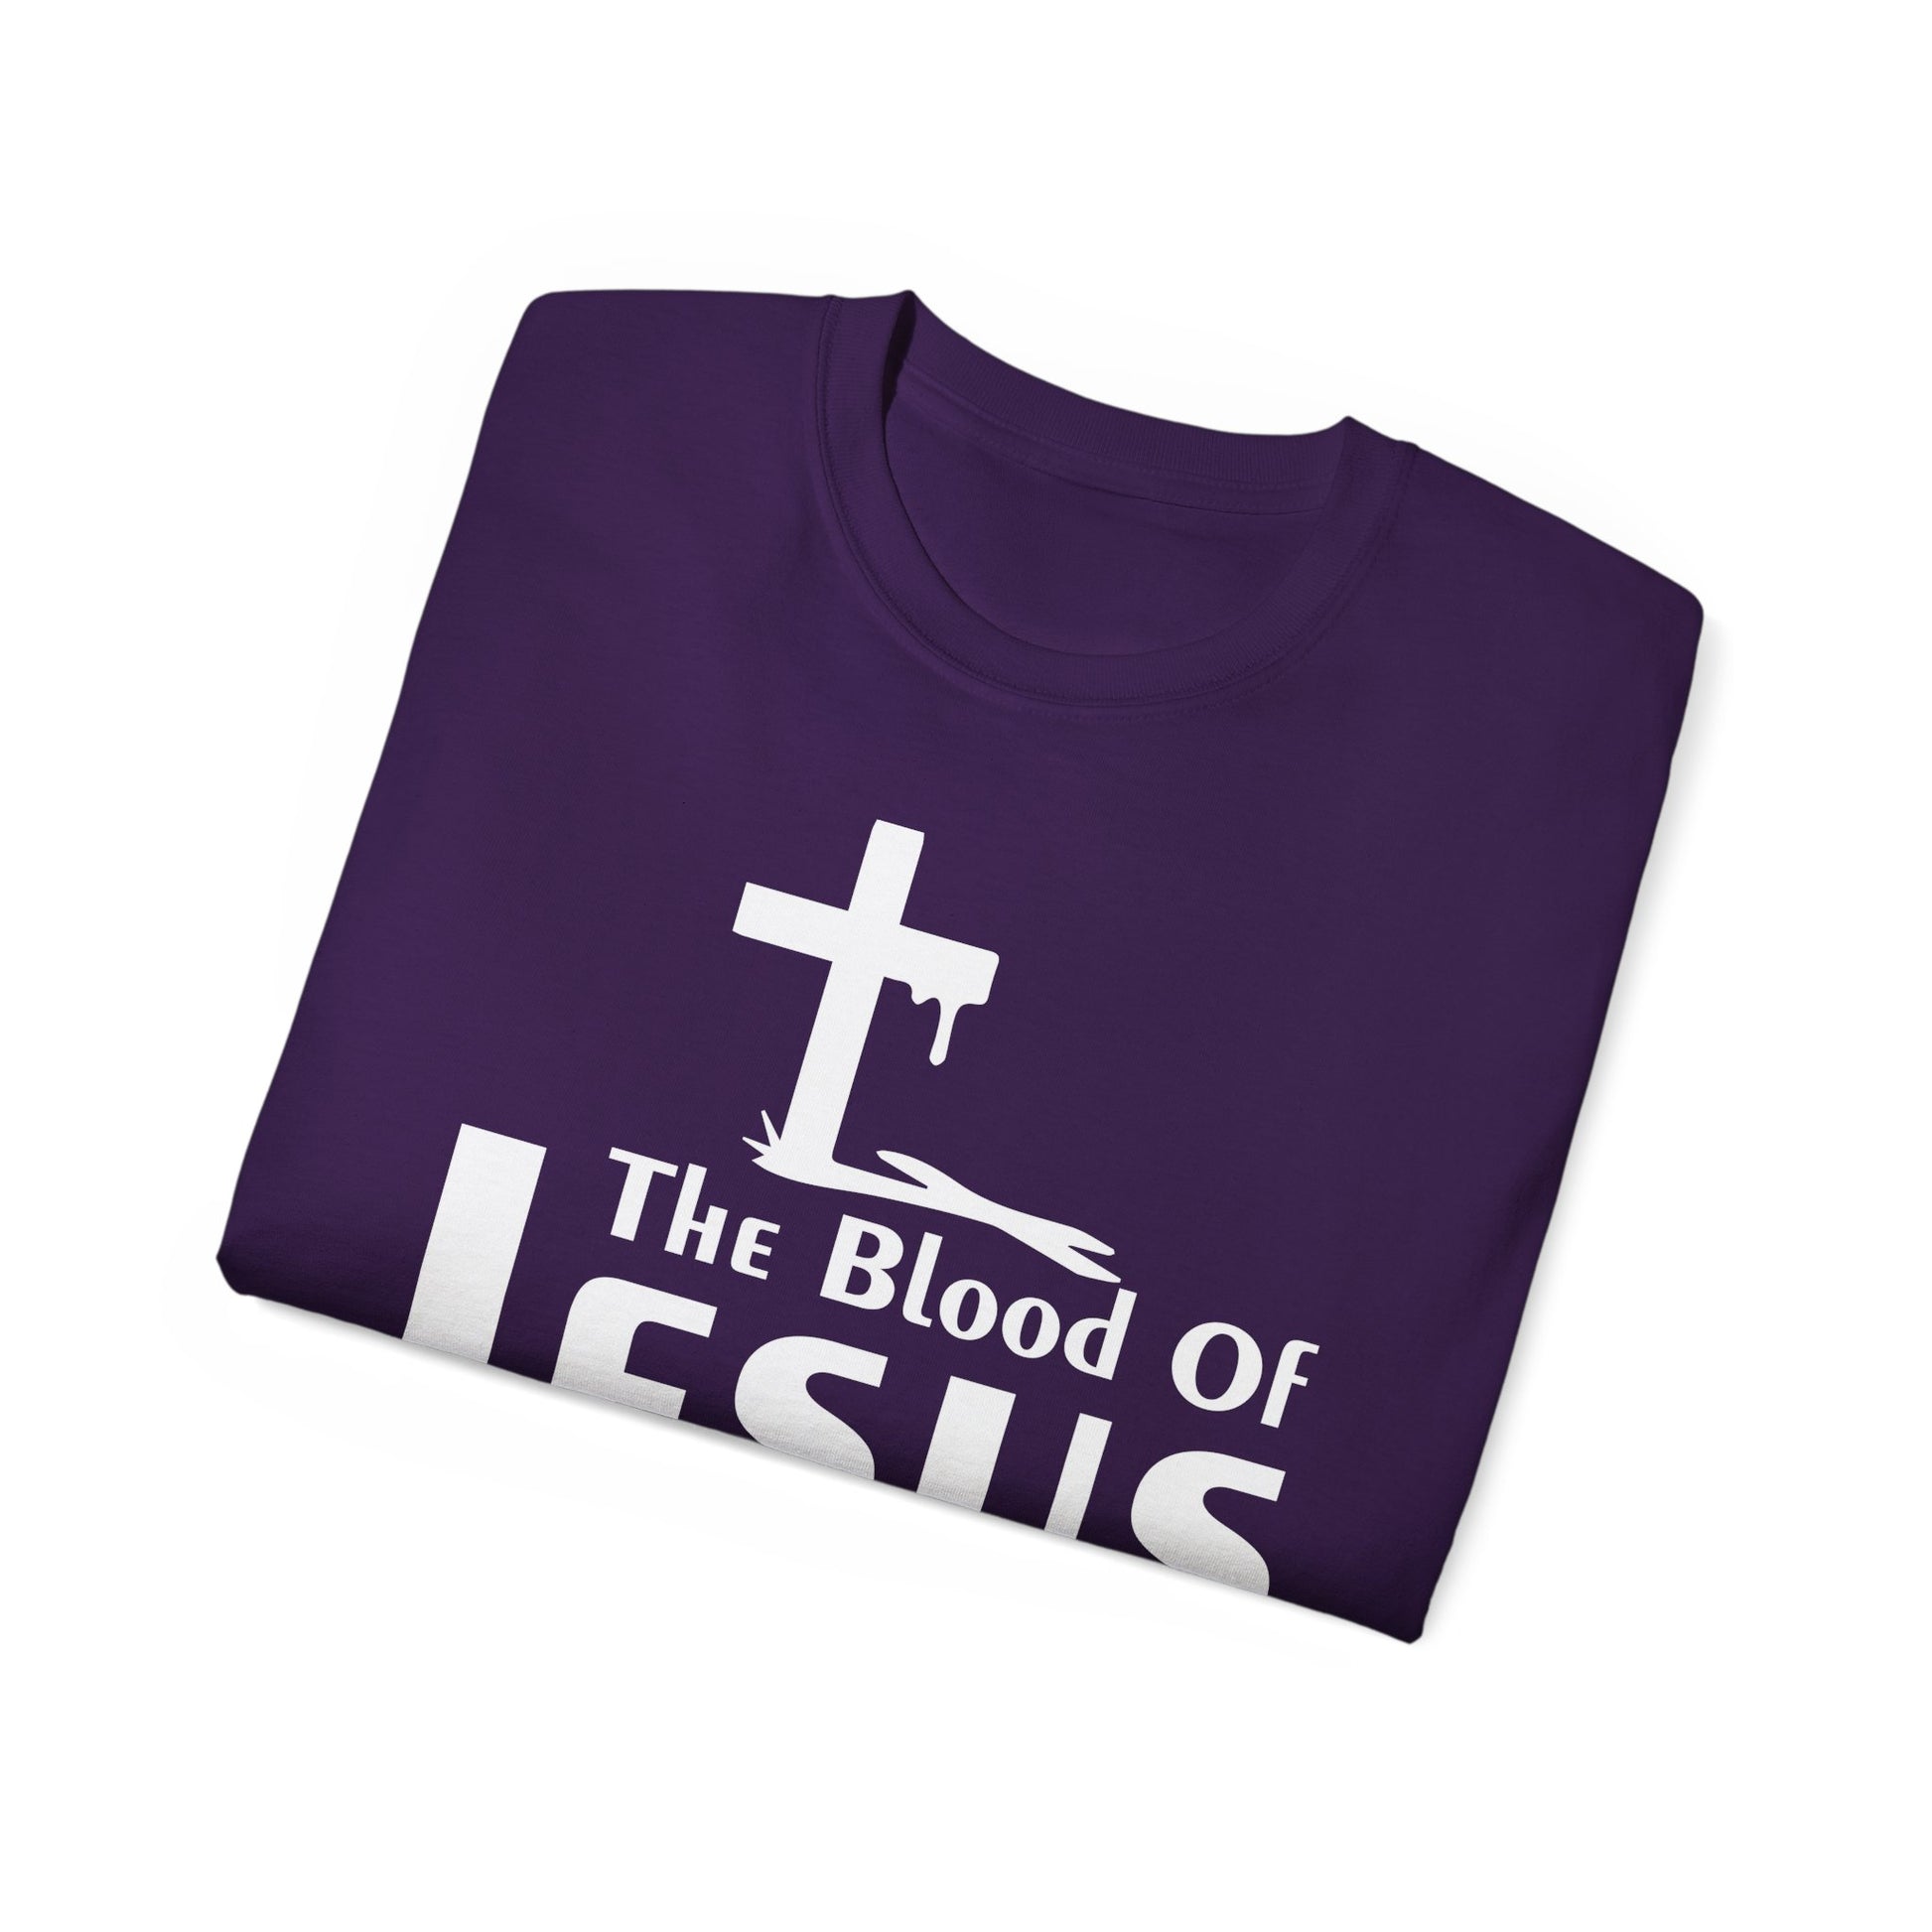 THE BLOOD OF JESUS STILL HEALS Unisex Christian Ultra Cotton Tee Printify